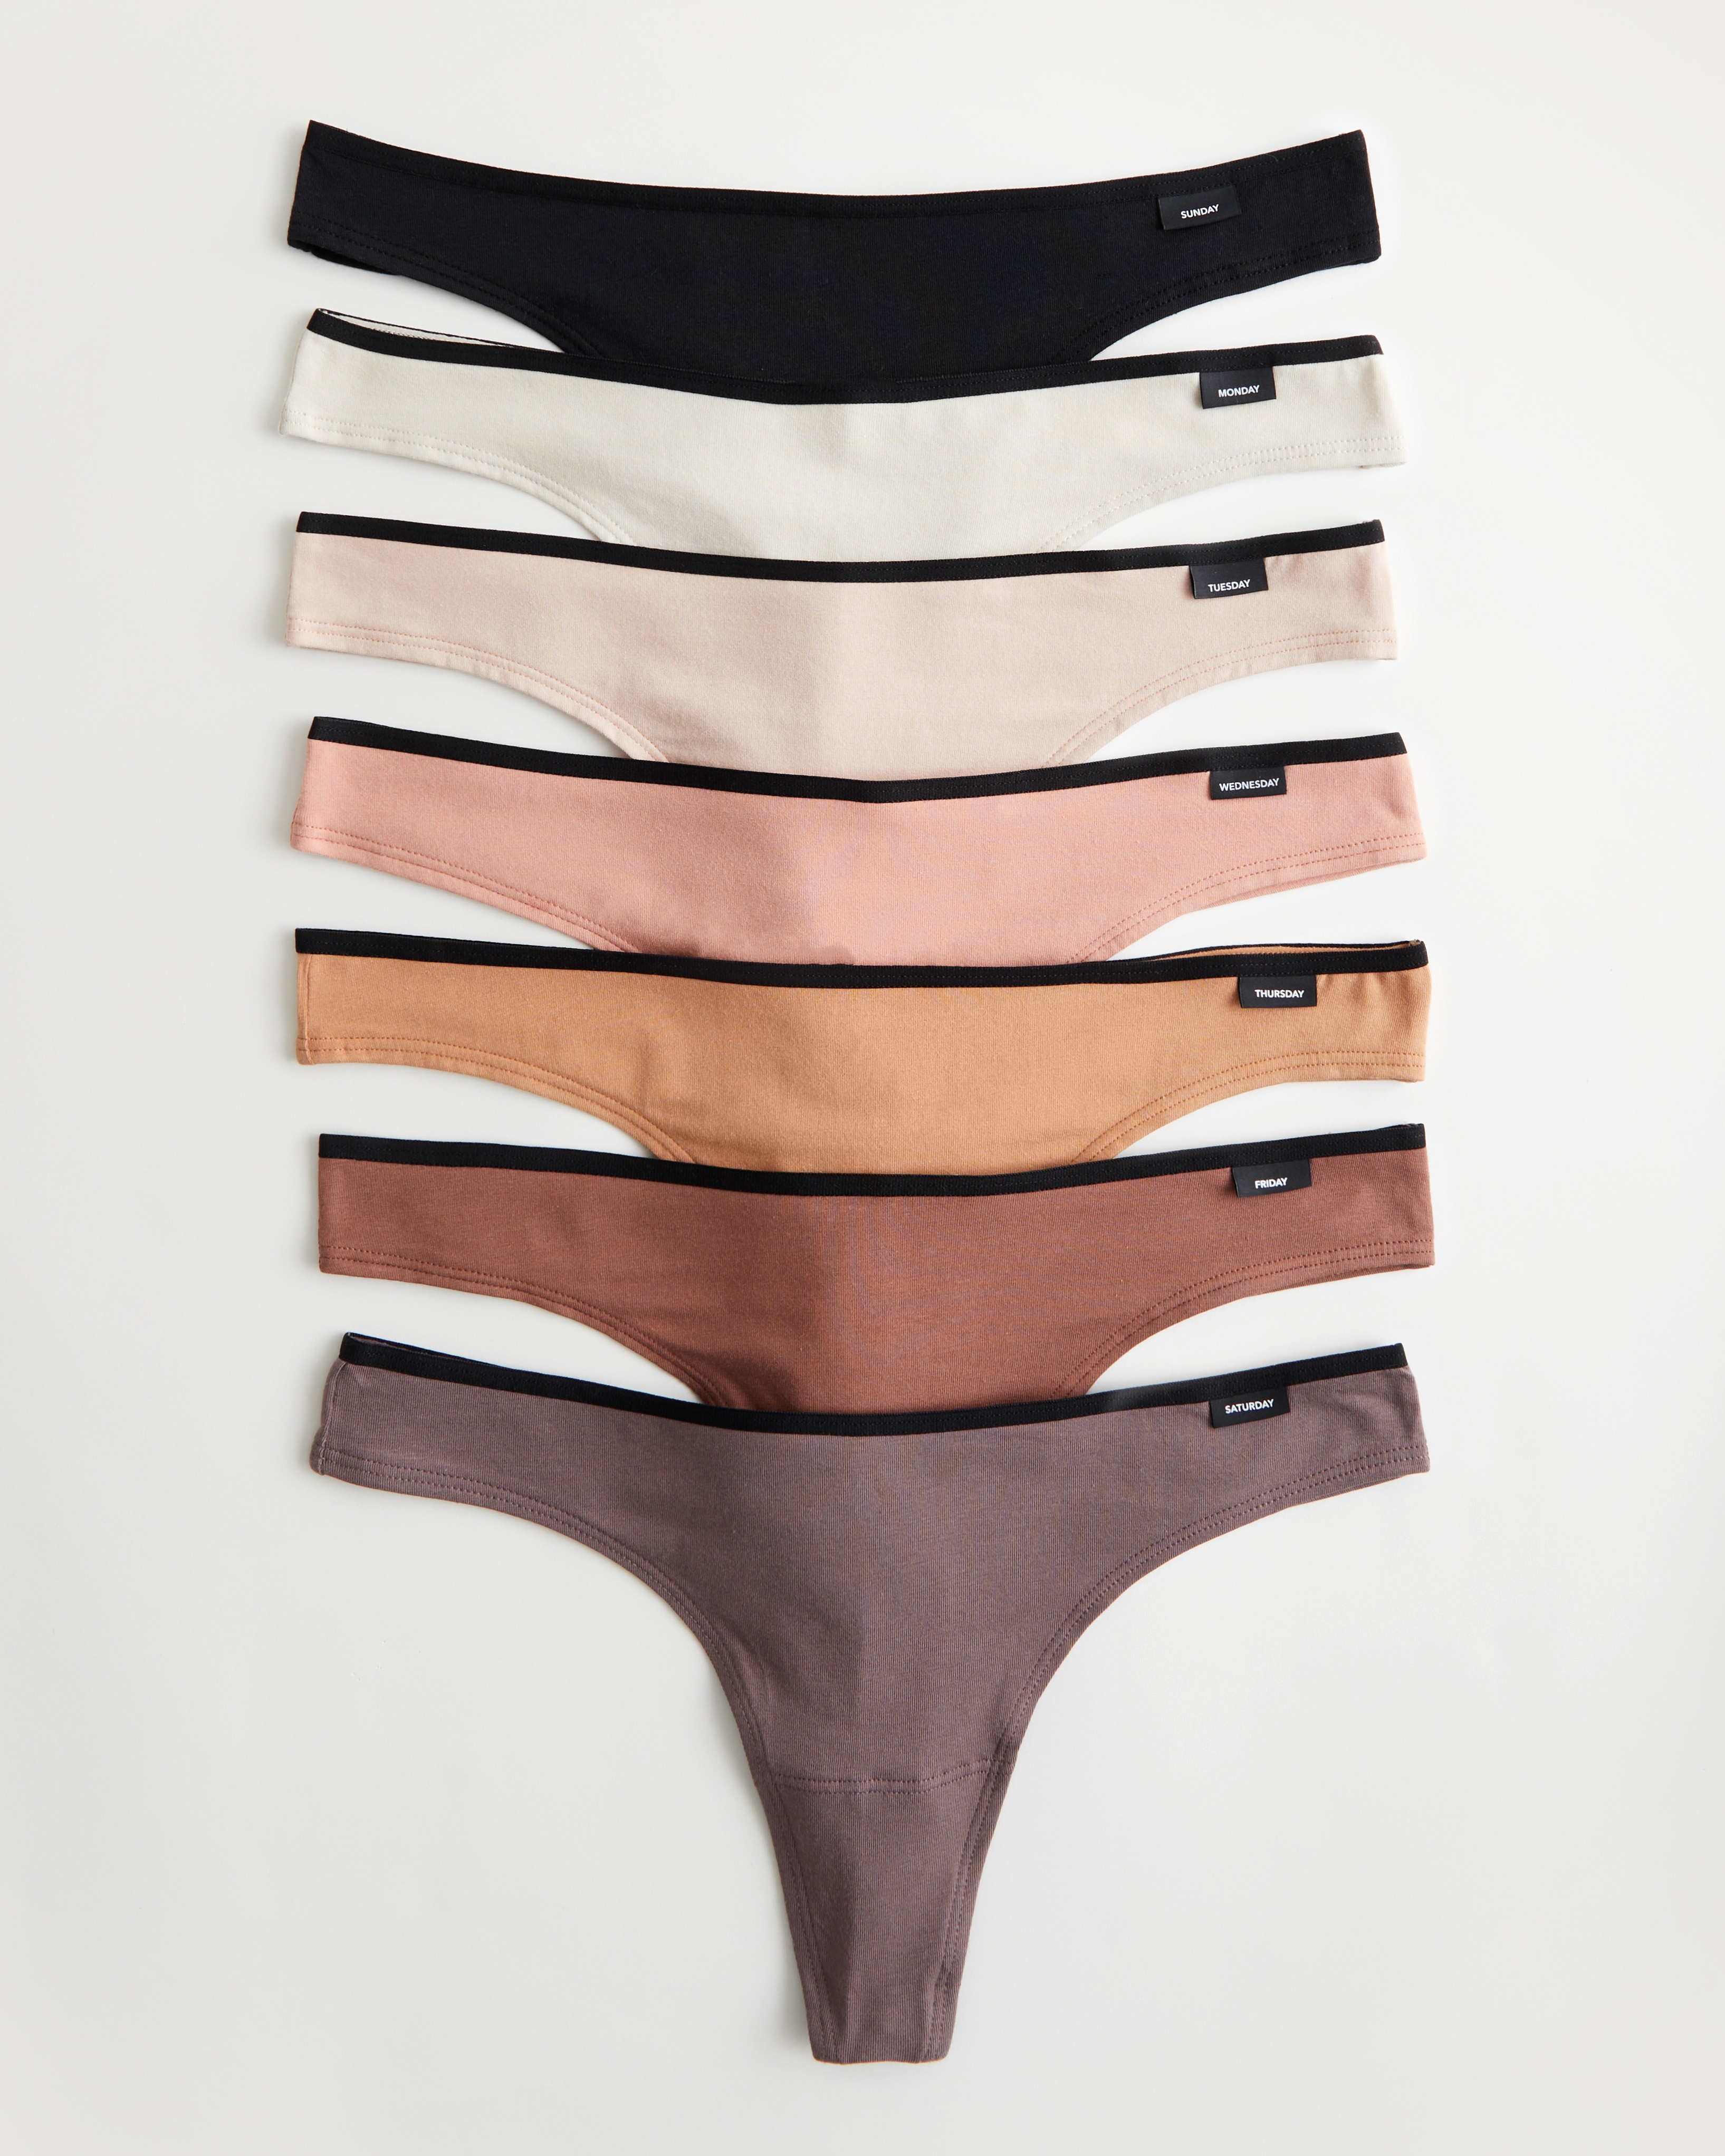 Gilly Hicks Cotton Blend Thong Underwear 7-Pack